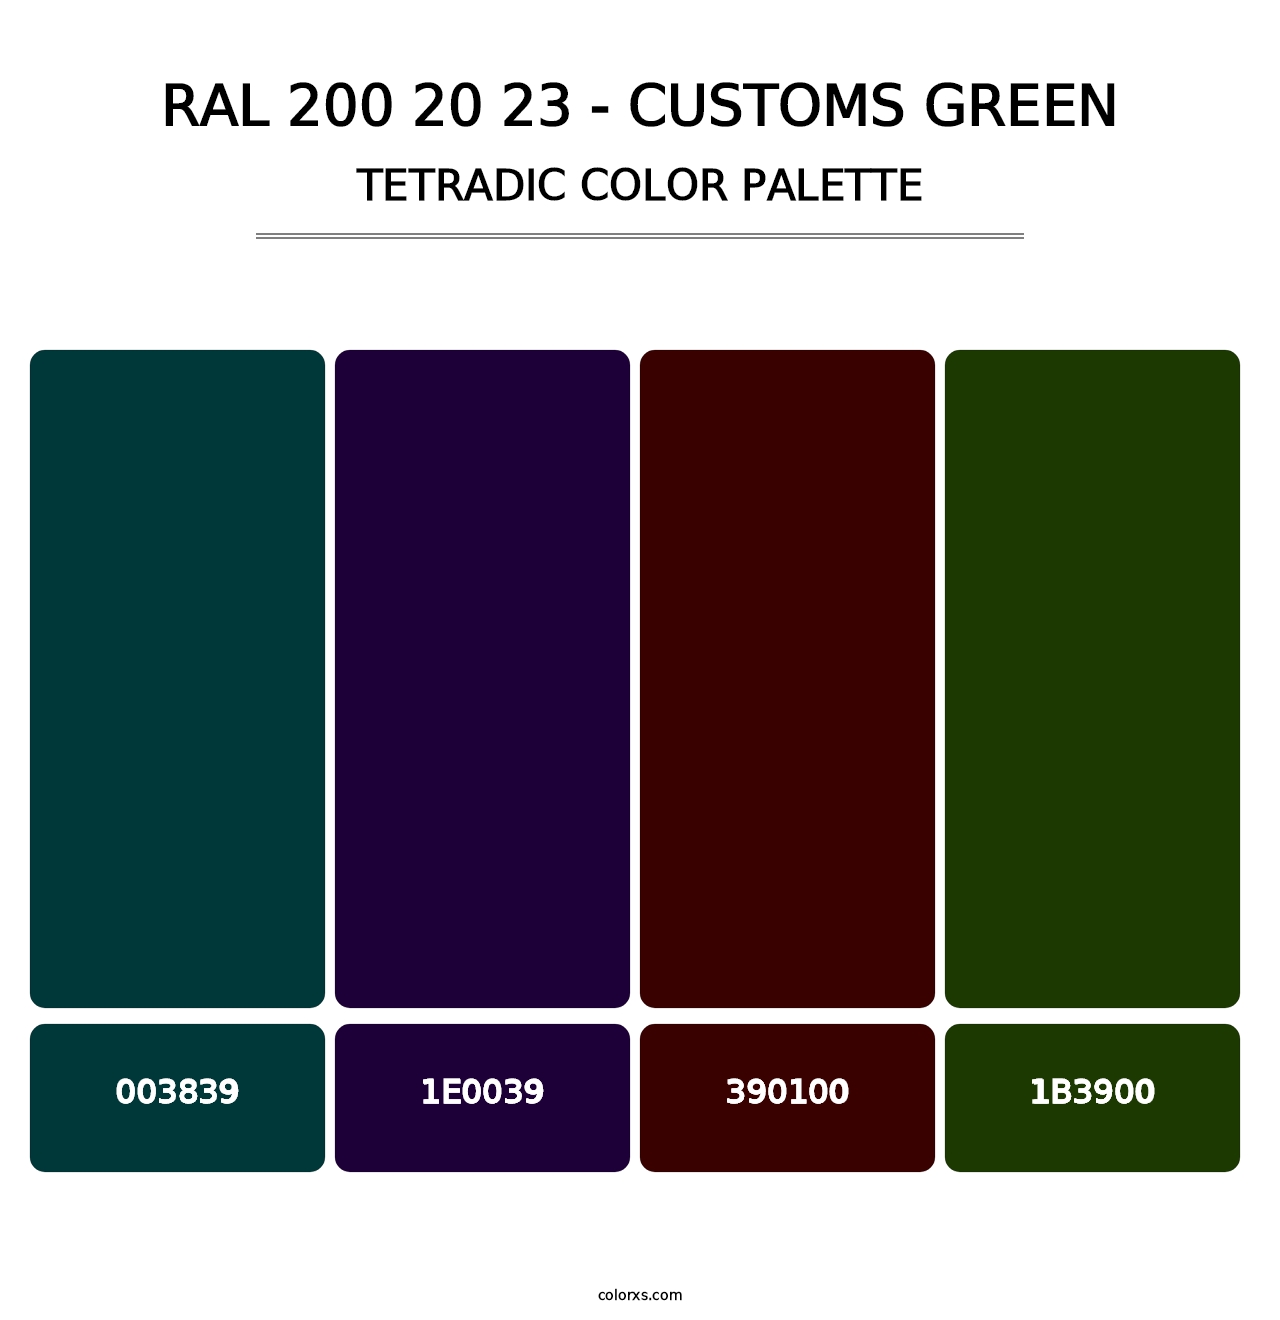 RAL 200 20 23 - Customs Green - Tetradic Color Palette